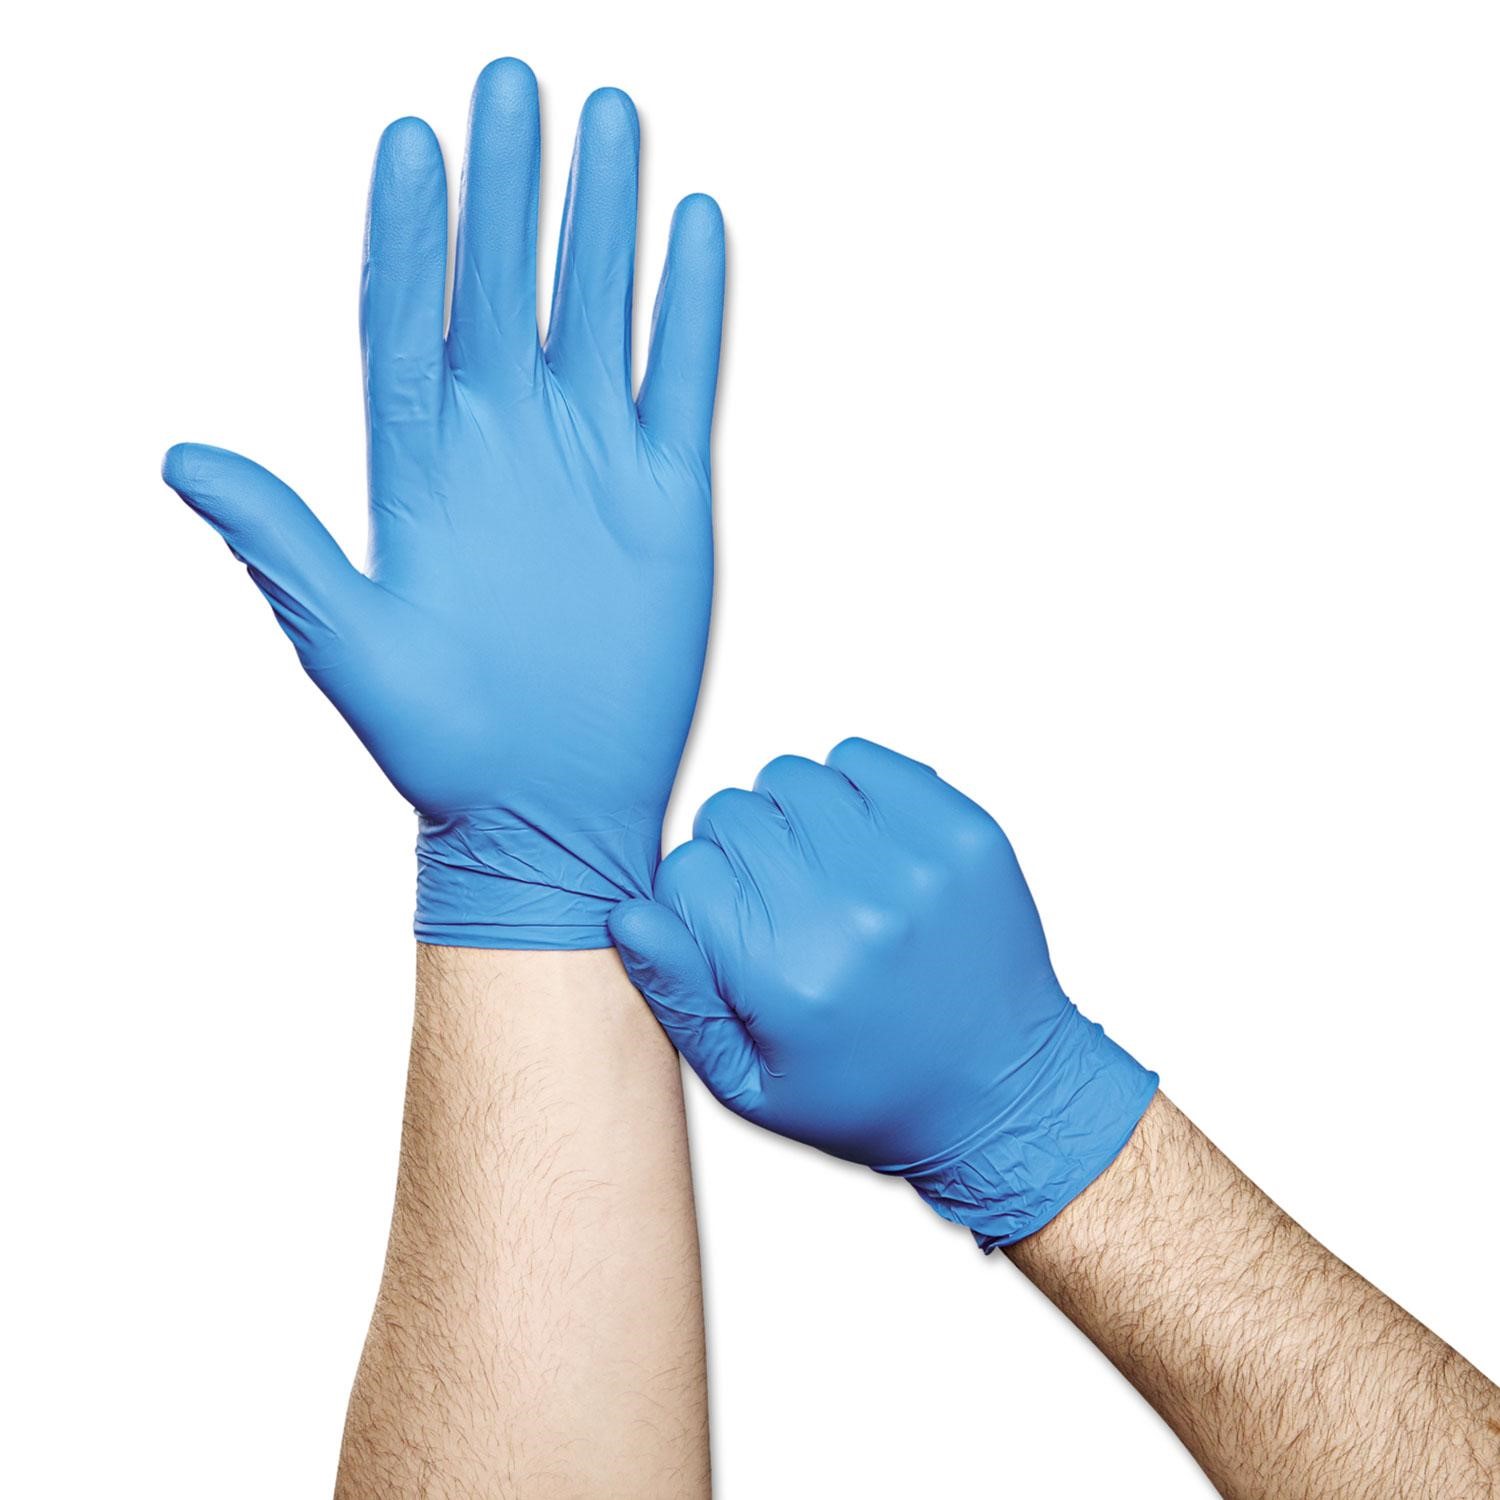 Safety Lab, Safety & Work Gloves  Best Price online for Safety